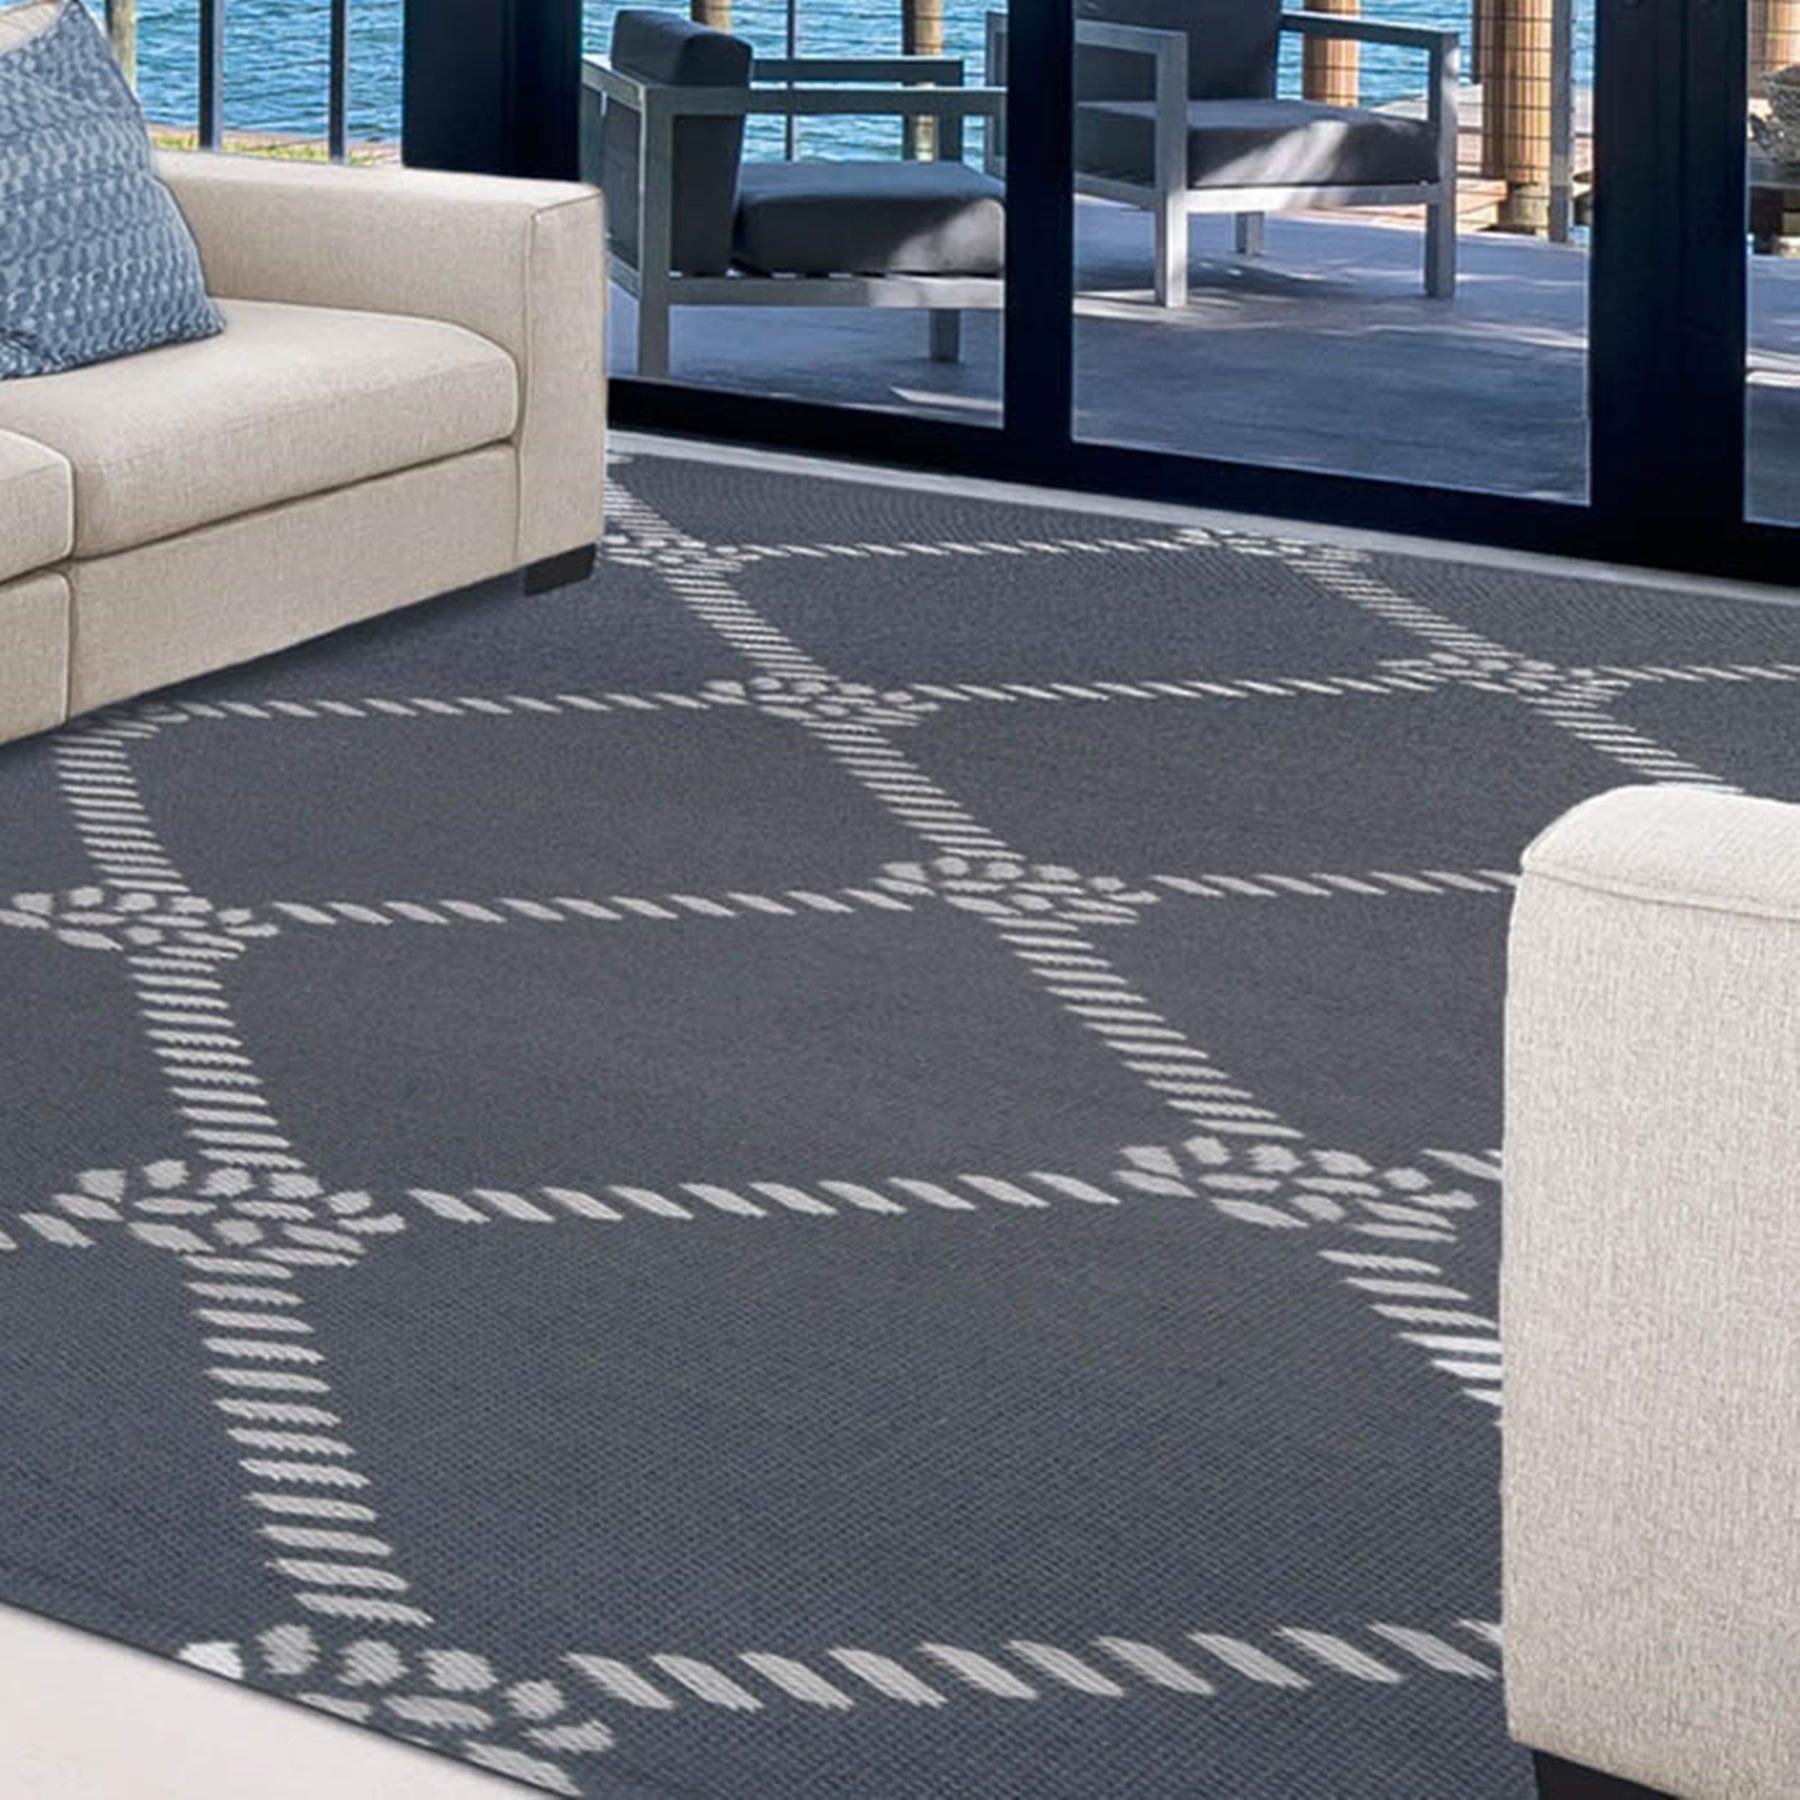 Superior Coastal Geometric Lattice Indoor Outdoor Luxurious Area Rug - Grey